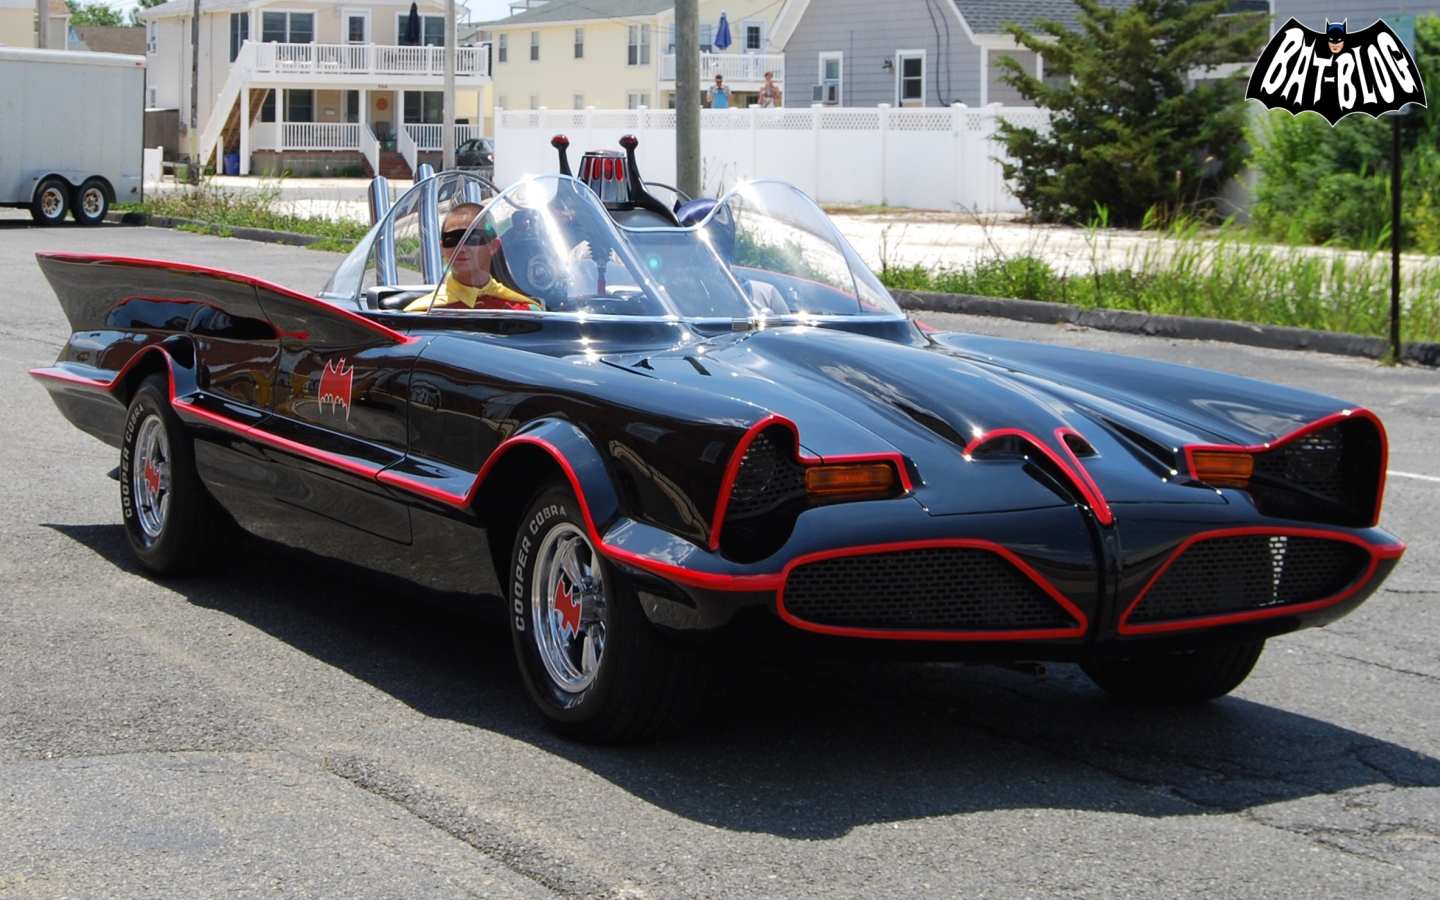 New Batmobile Car And Batgirl Wallpaper Stylish